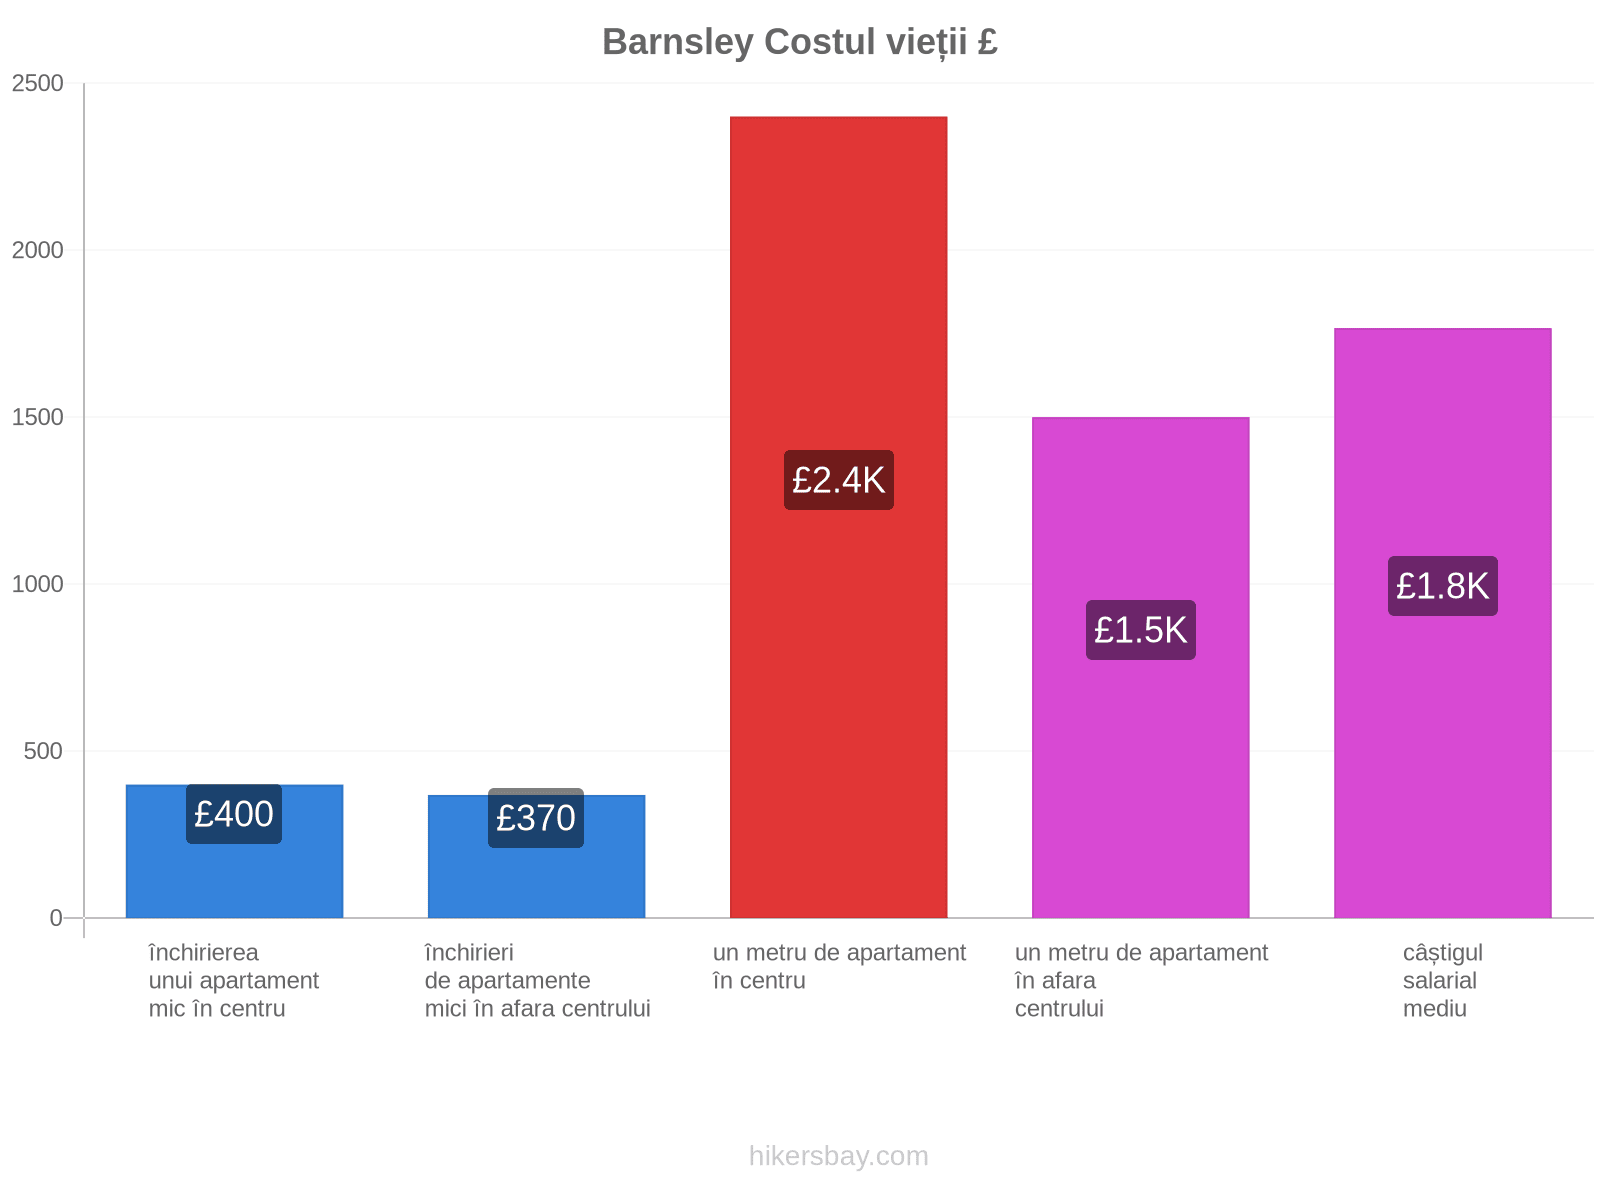 Barnsley costul vieții hikersbay.com